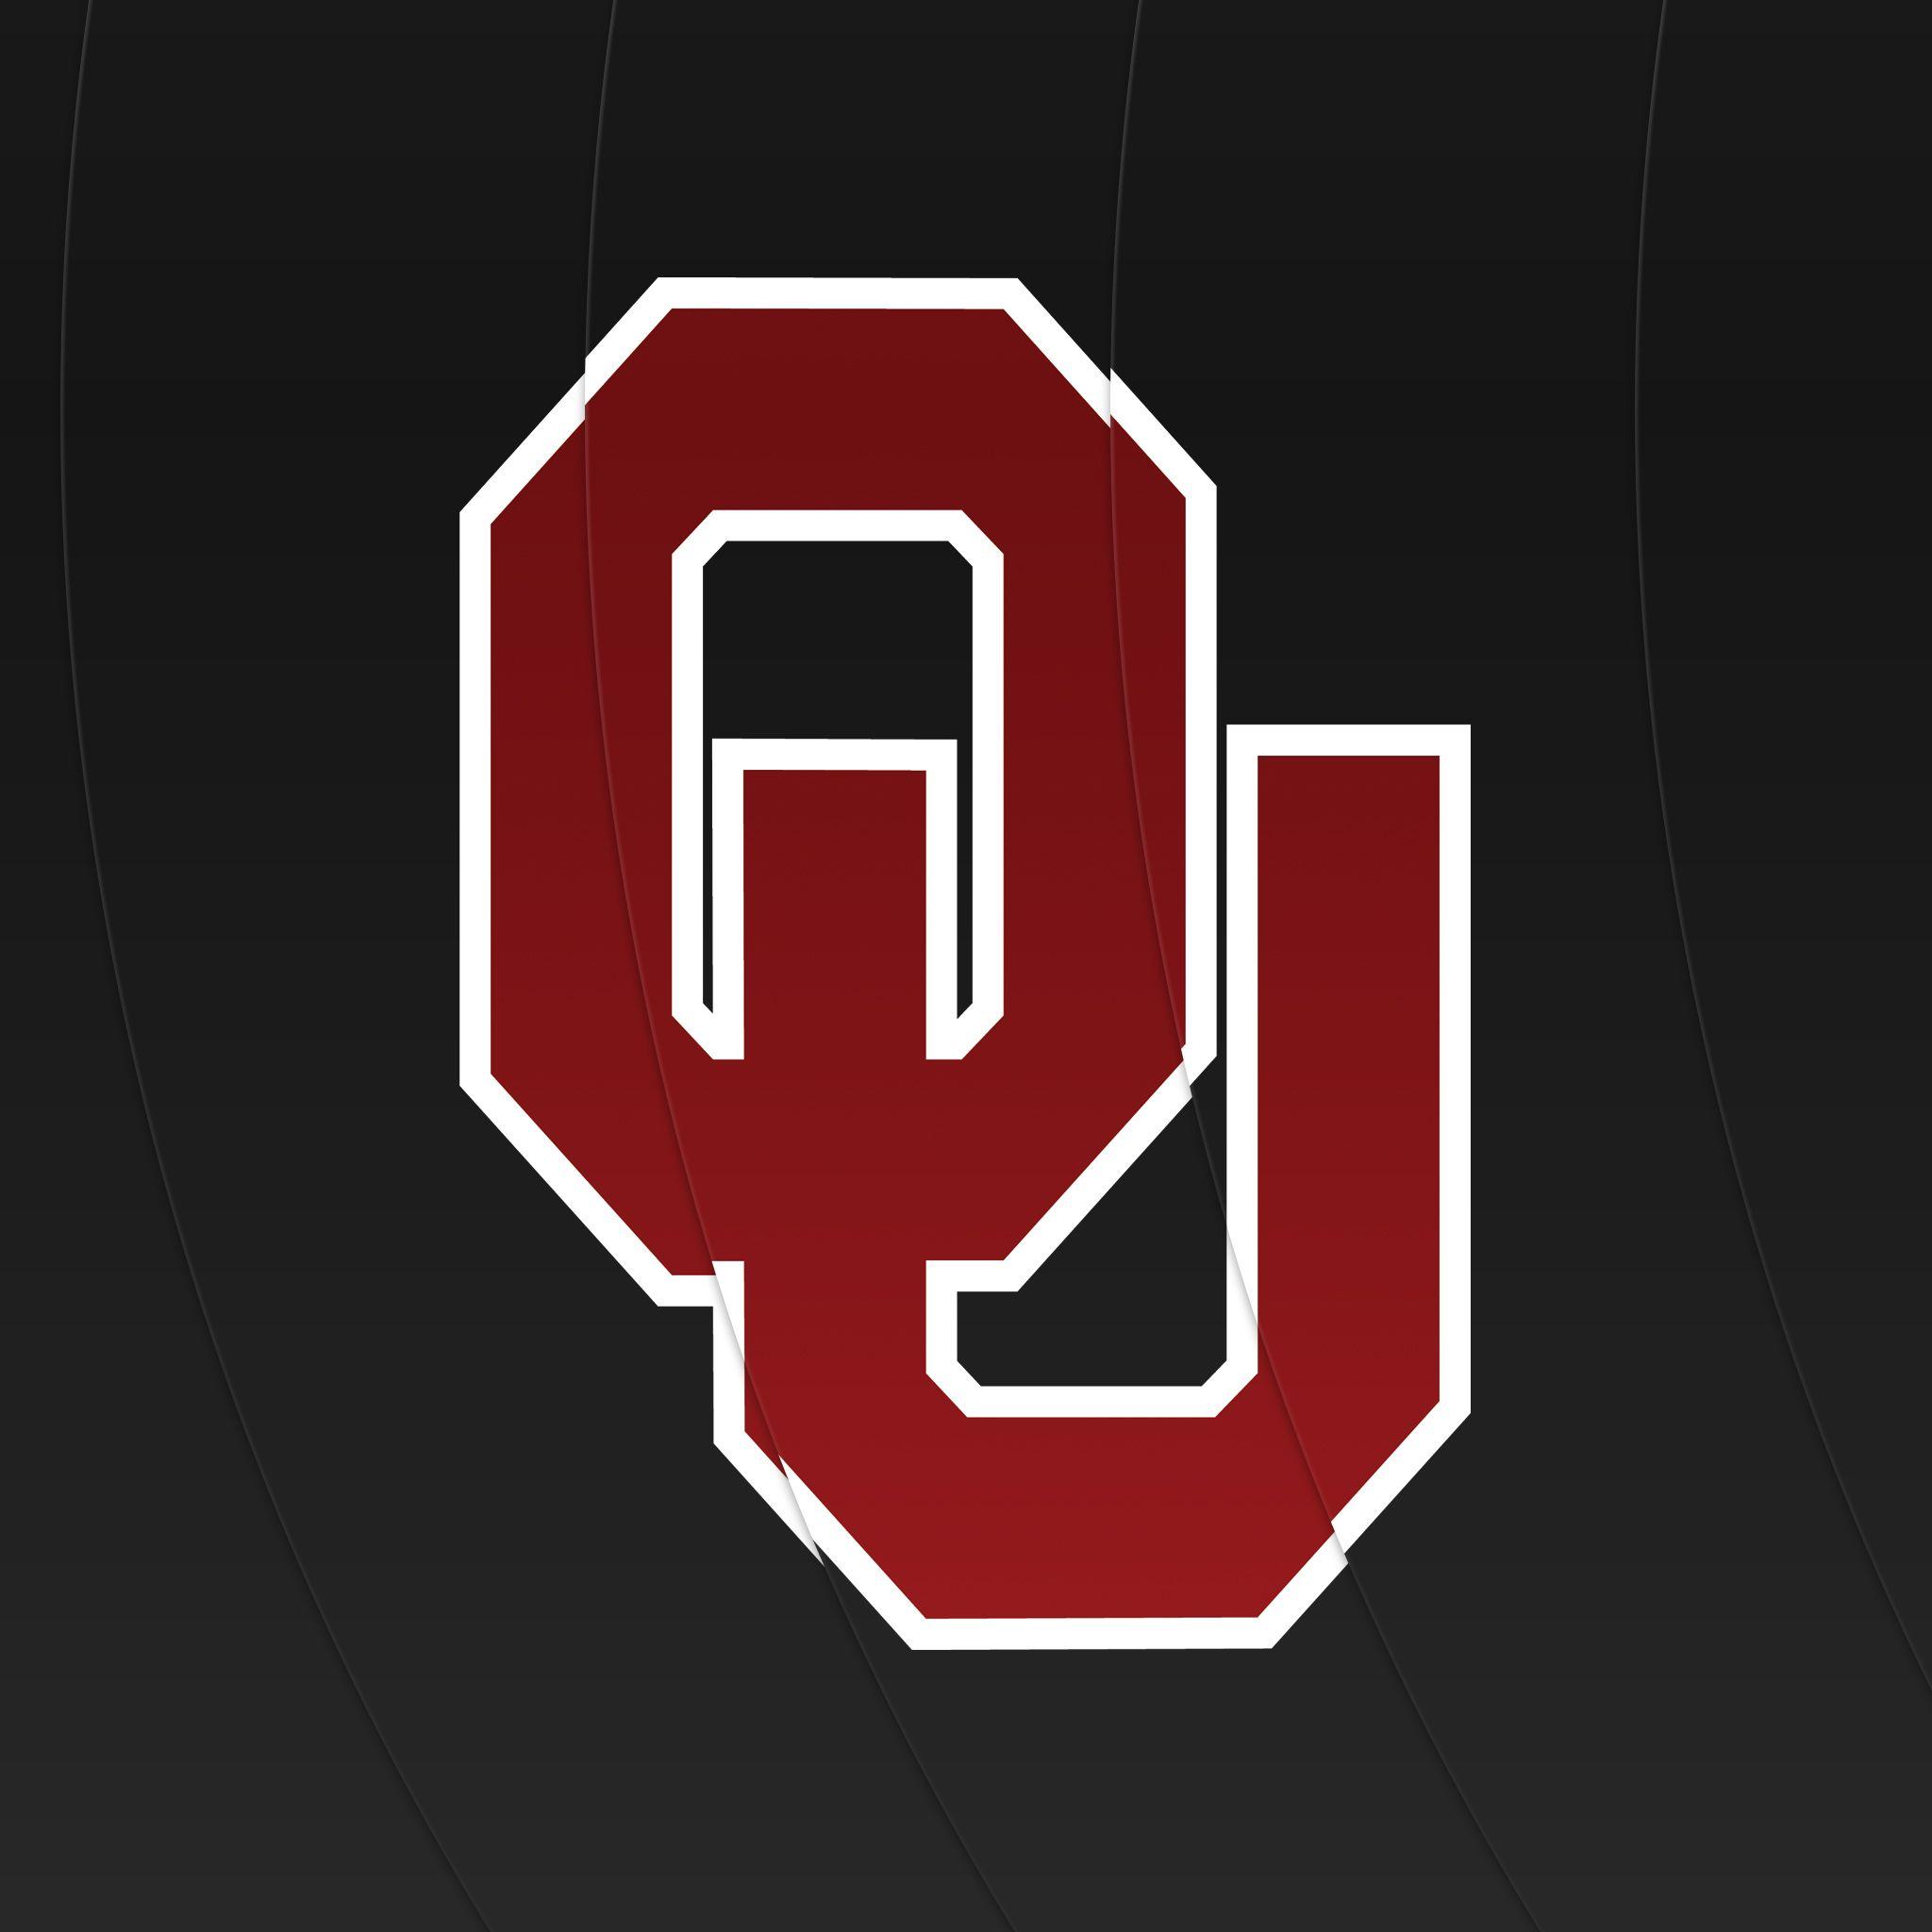 Sooners Logo - Best Photos of Oklahoma University Logo - University of Oklahoma ...